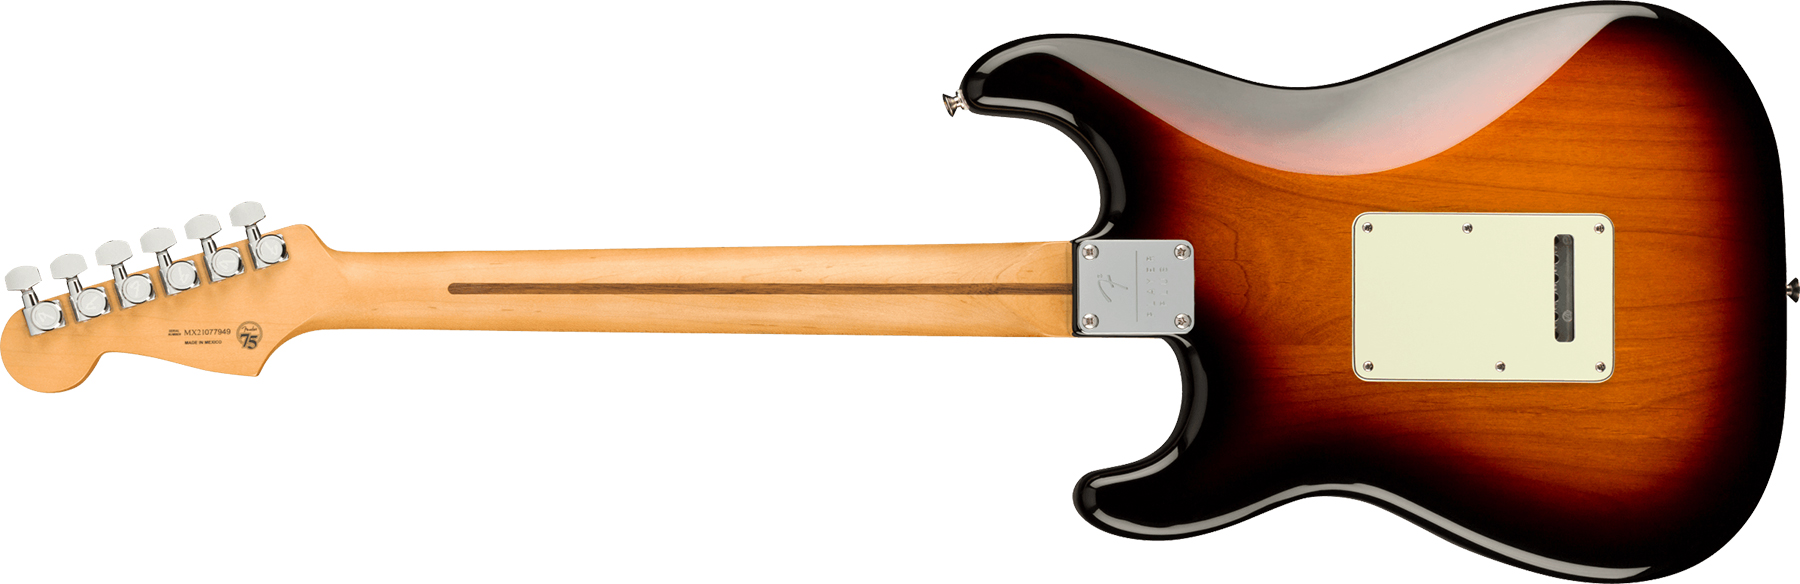 Fender Strat Player Plus Lh Mex Gaucher 3s Trem Mn - 3-color Sunburst - Left-handed electric guitar - Variation 1